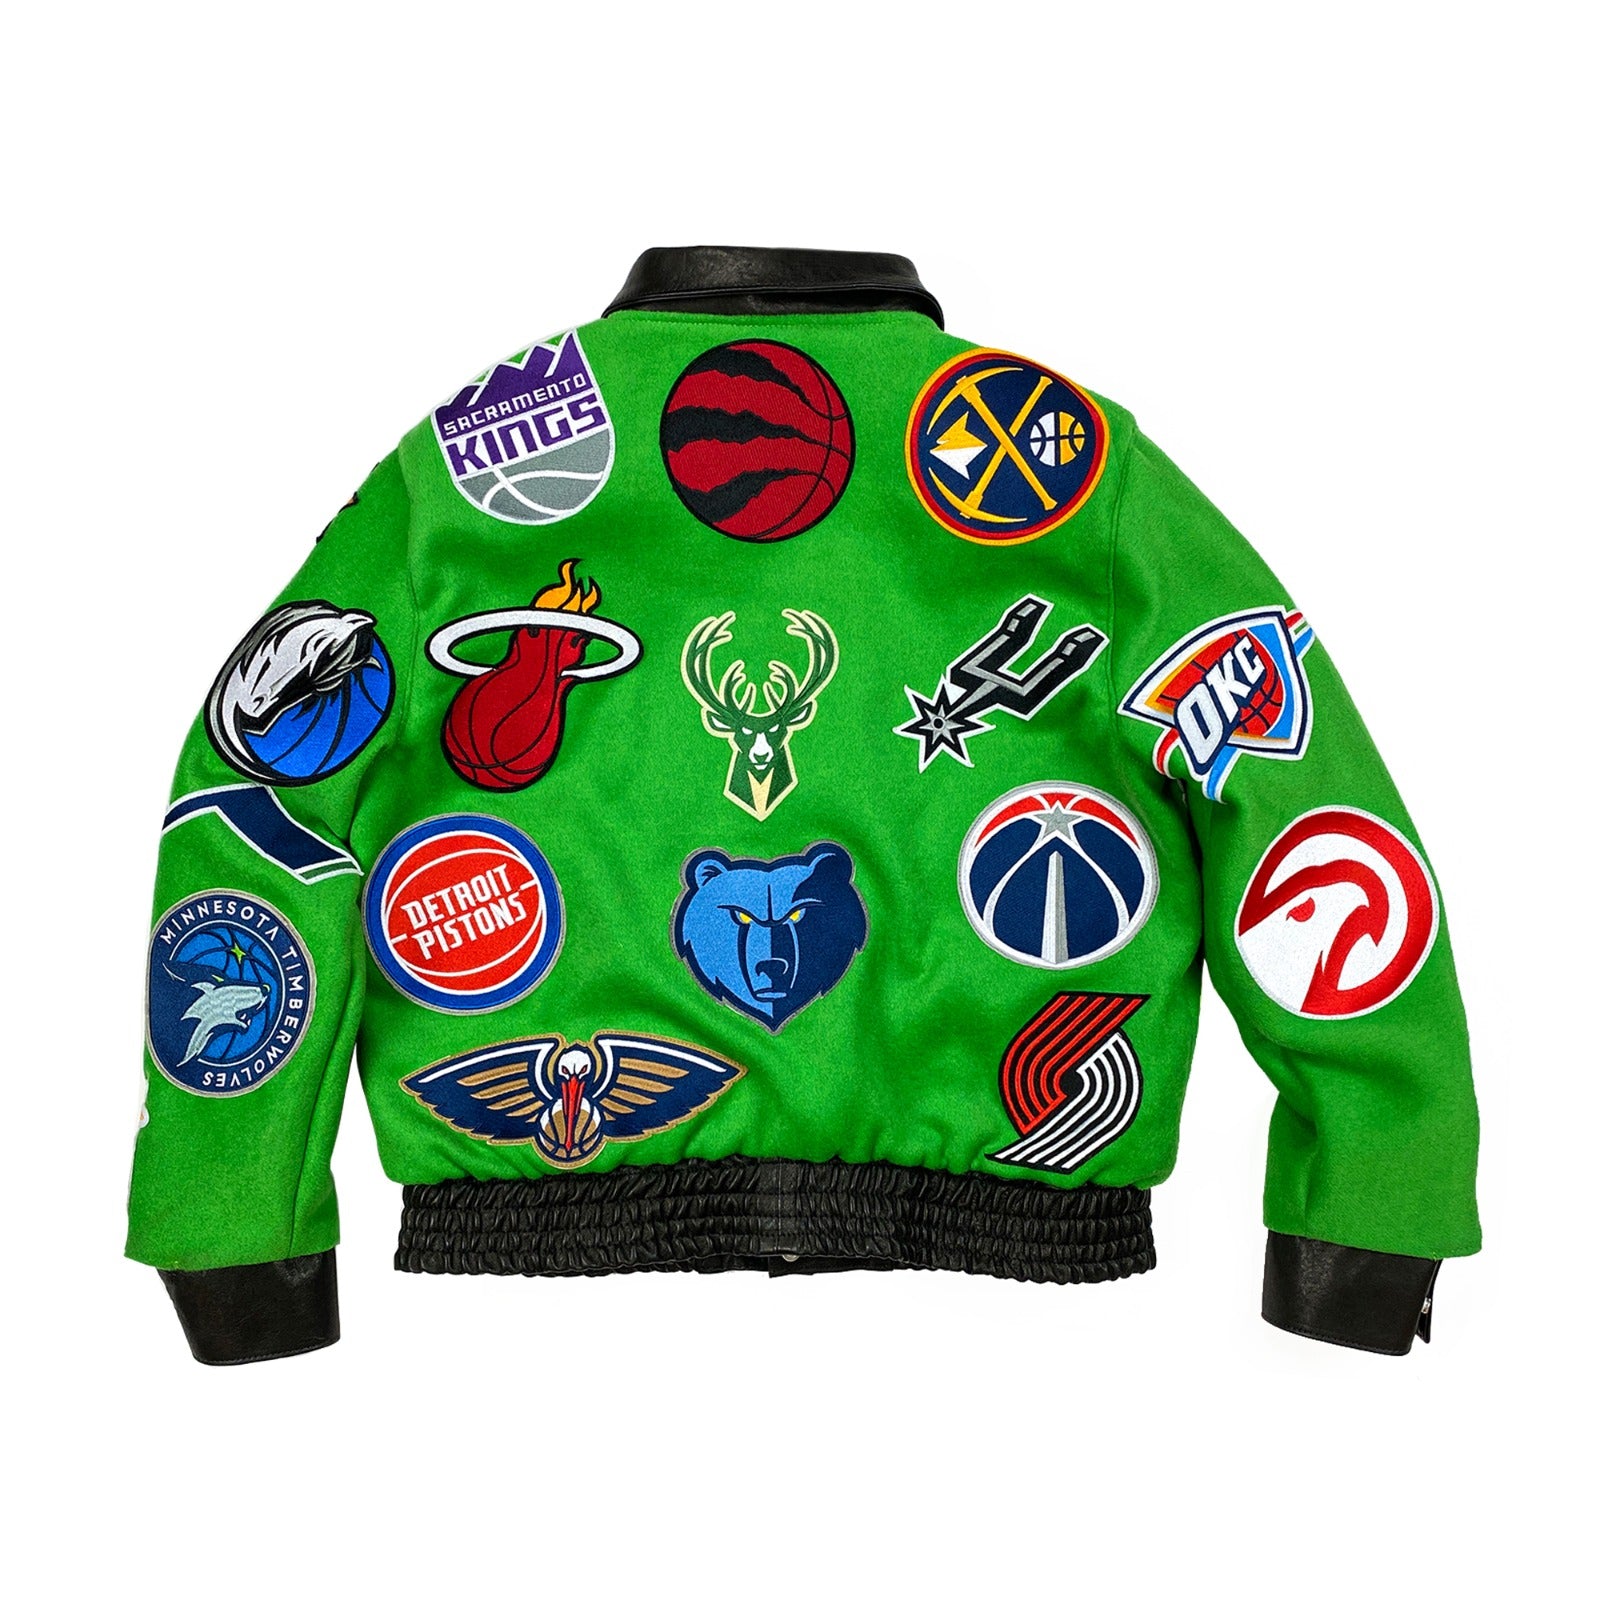 Maker of Jacket Varsity Jackets Navy NBA Teams Collage Jeff Hamilton Wool